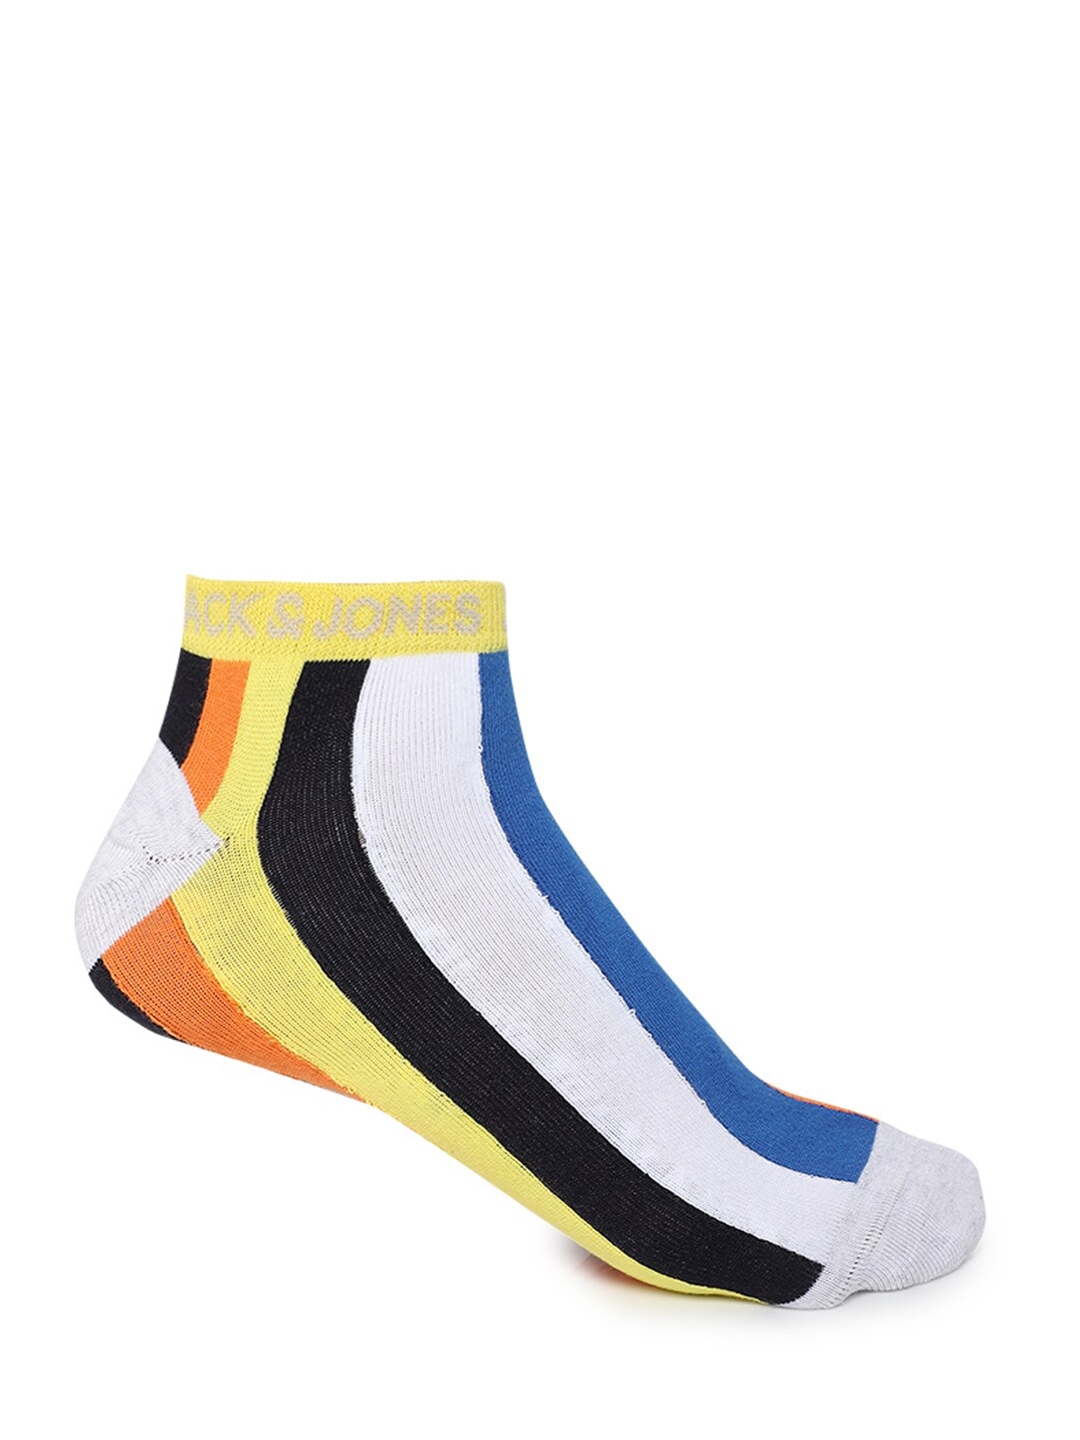 Jack   Jones Unisex Yellow   Orange Striped Cotton Ankle Length Socks